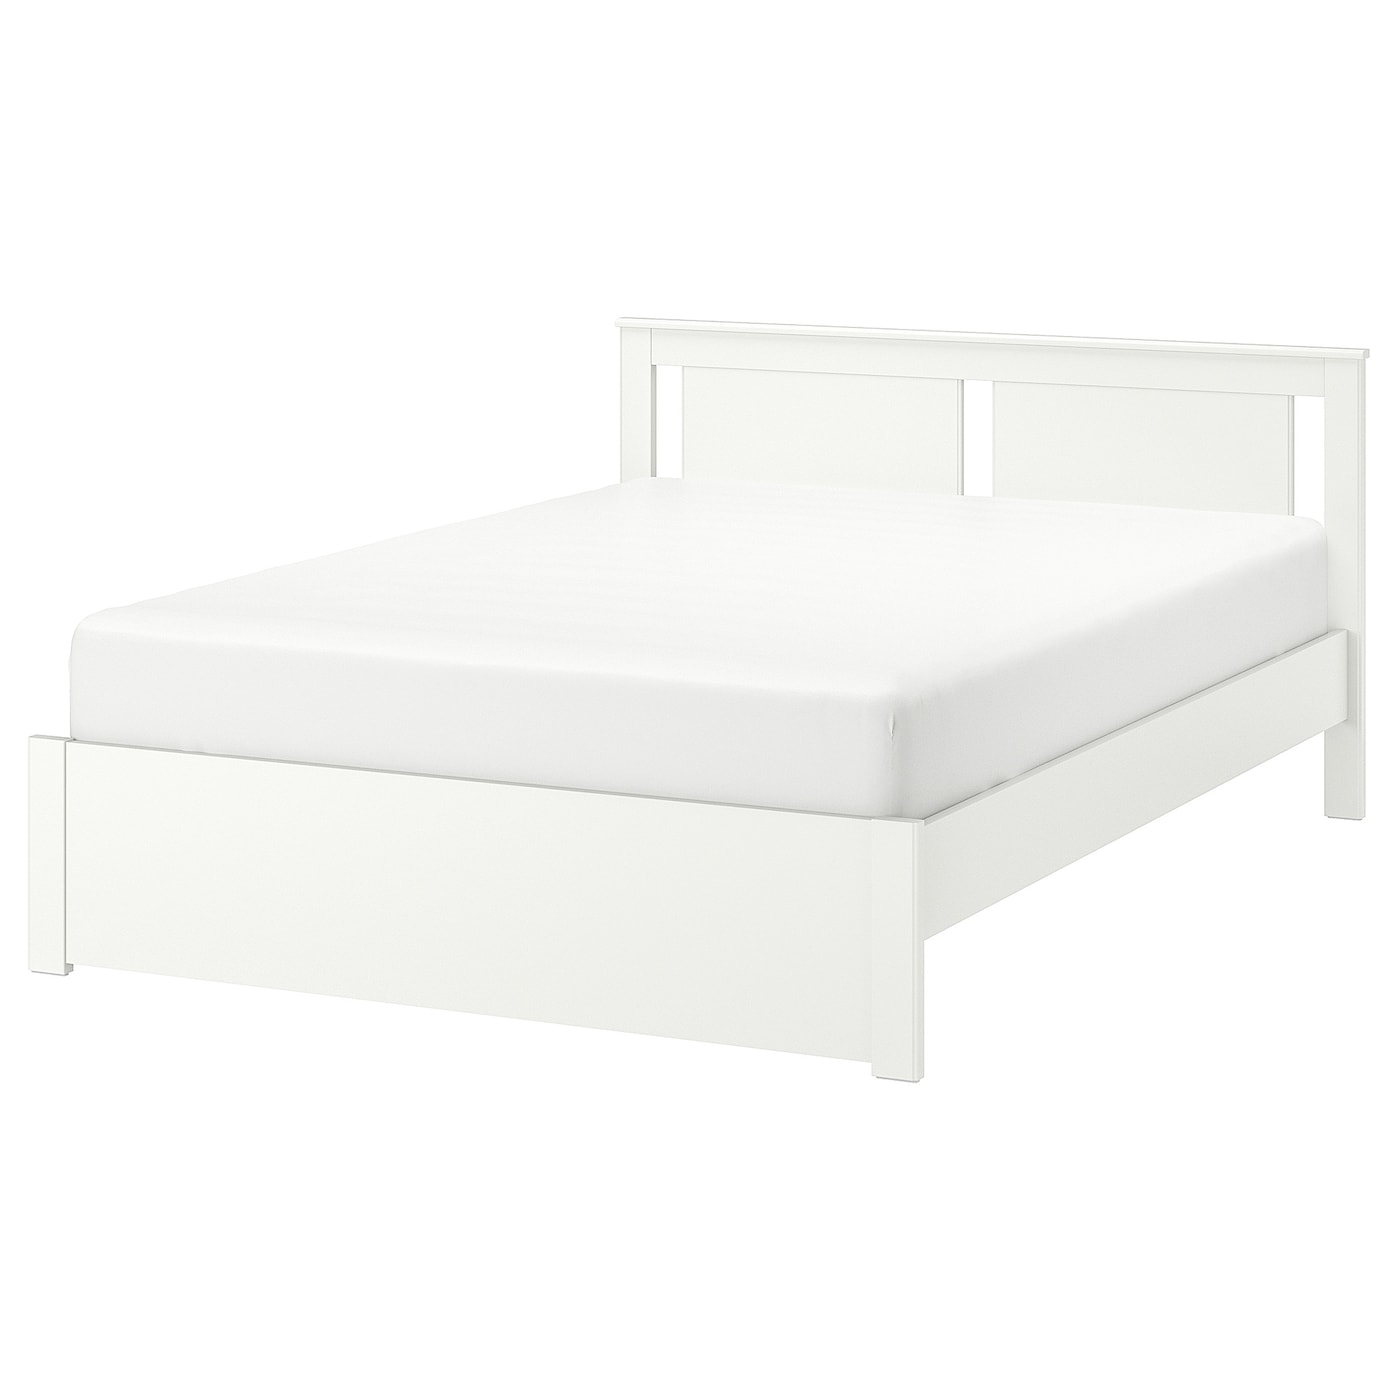 Каркас кровати - IKEA SONGESAND, 200х140 см, белый, СОНГЕСАНД ИКЕА